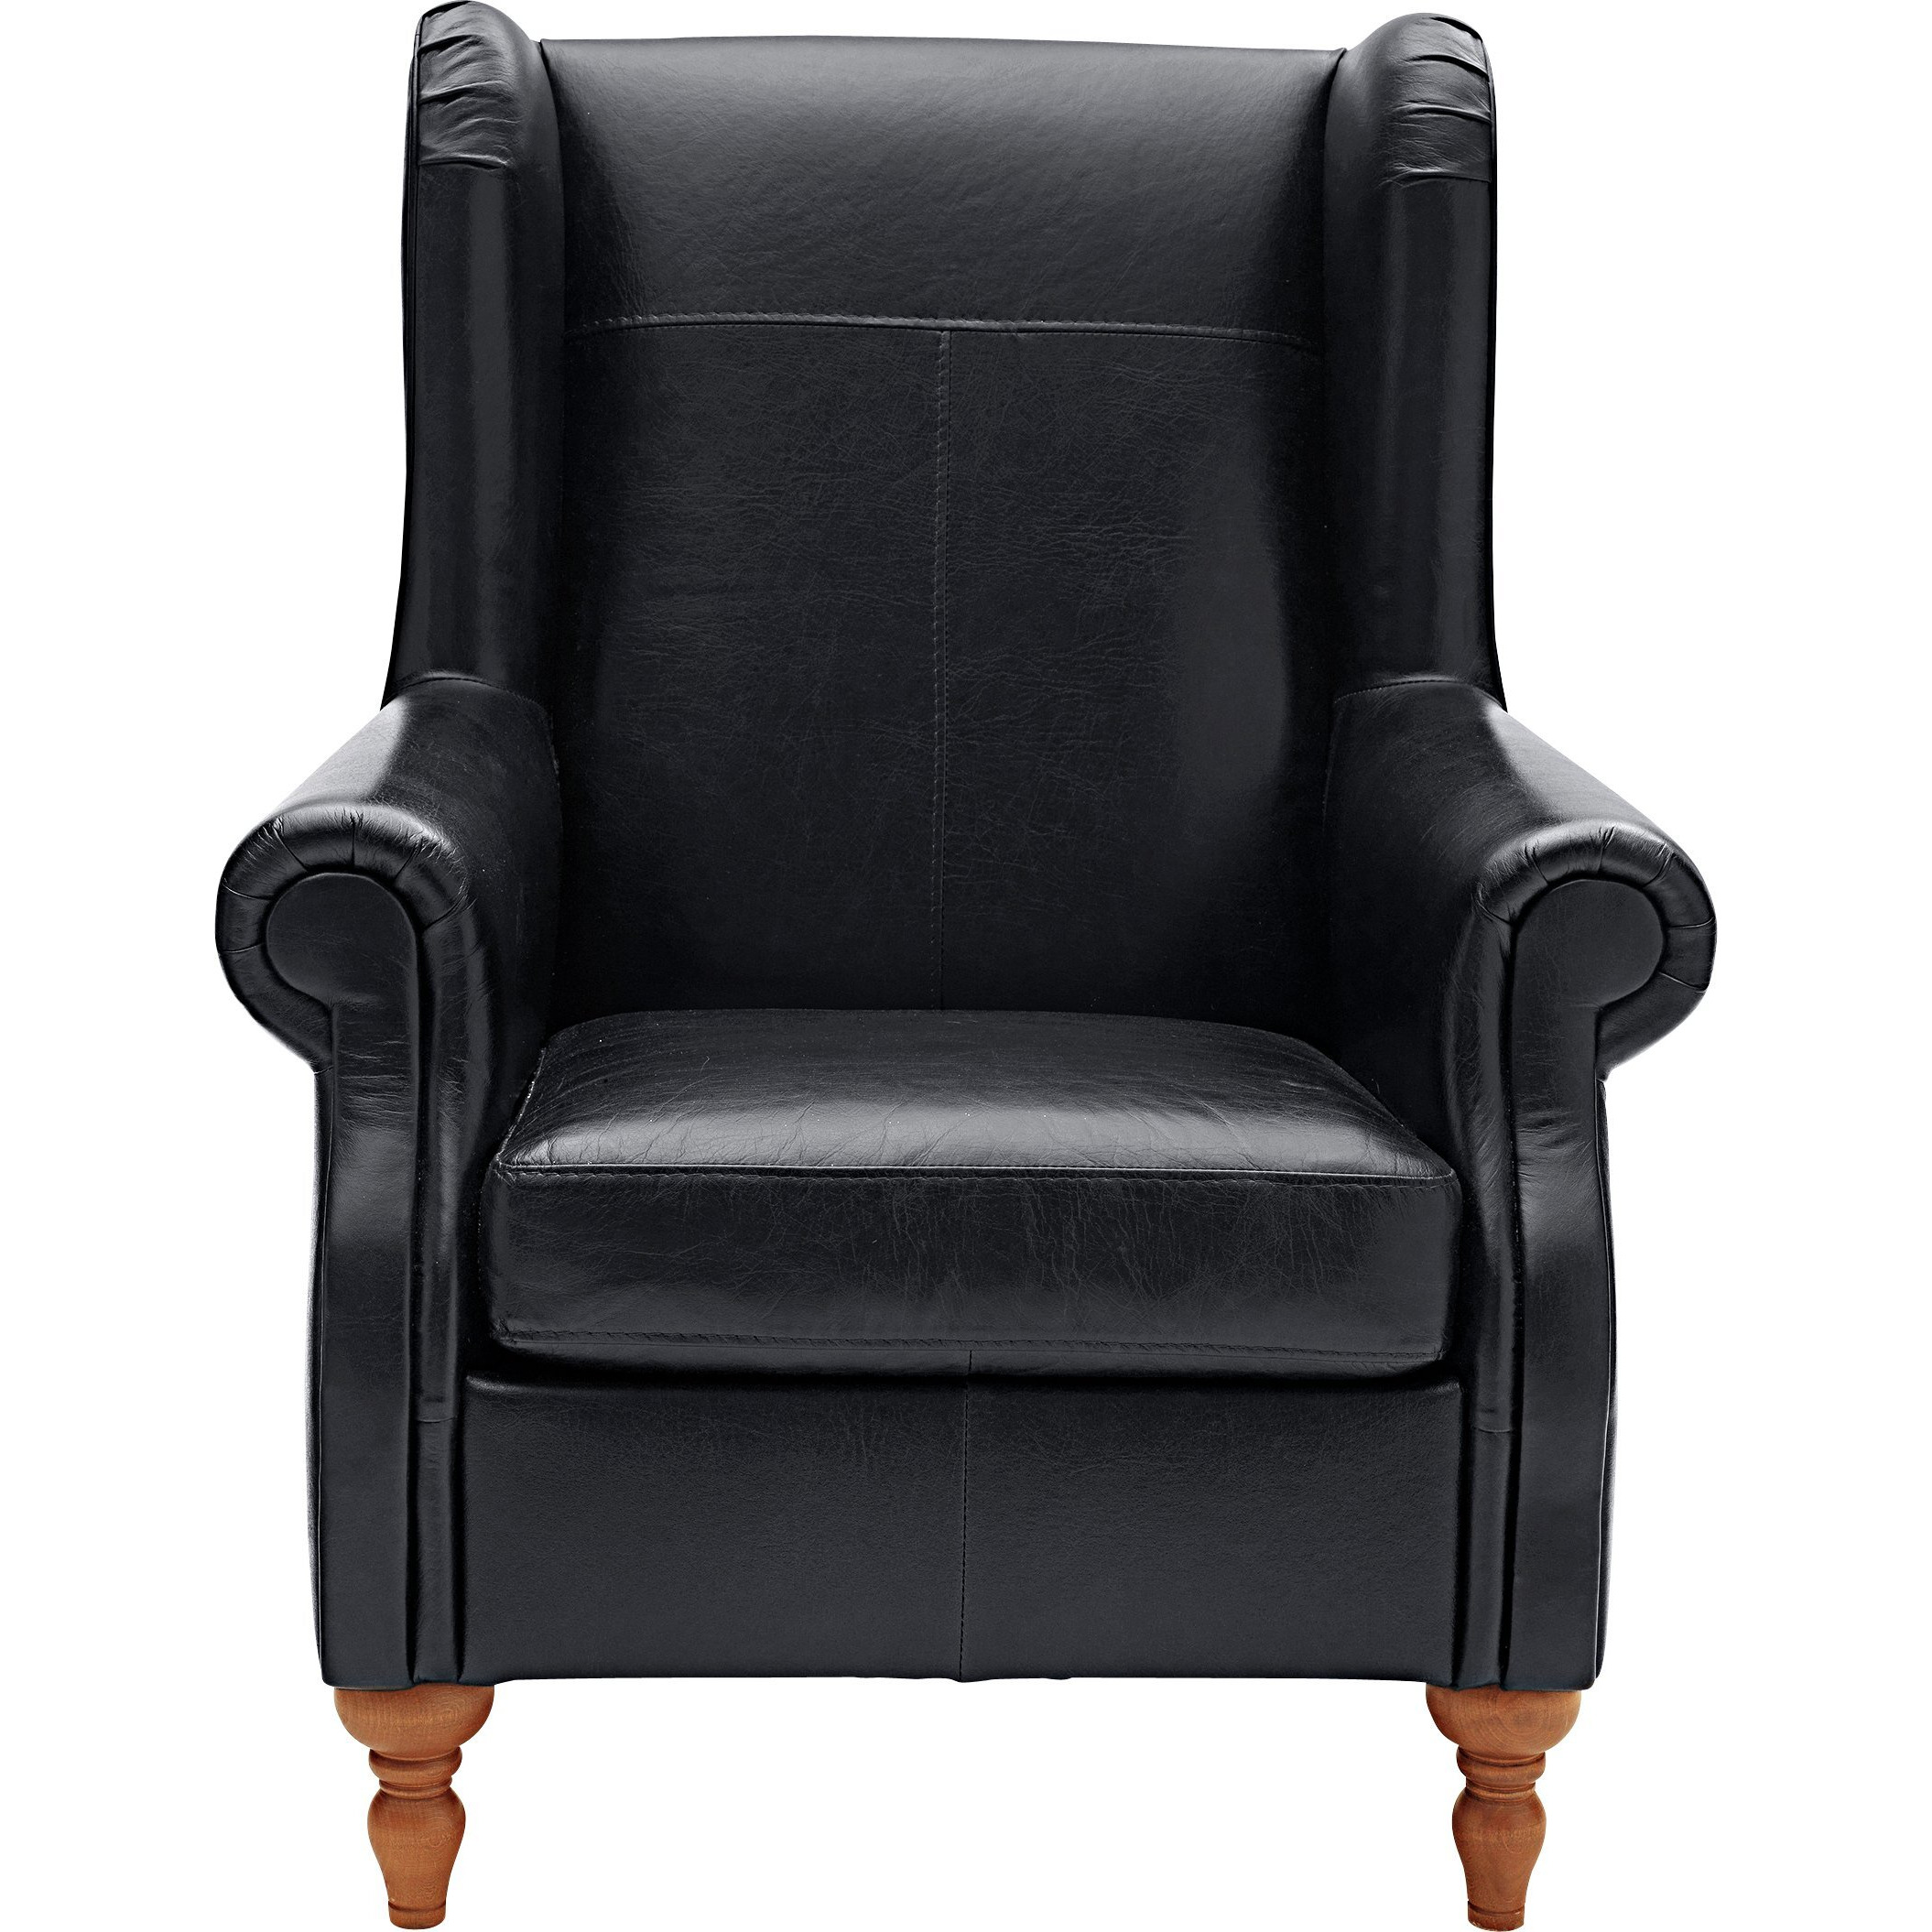 Argos Home Argyll Leather High Back Chair - Black - image 1